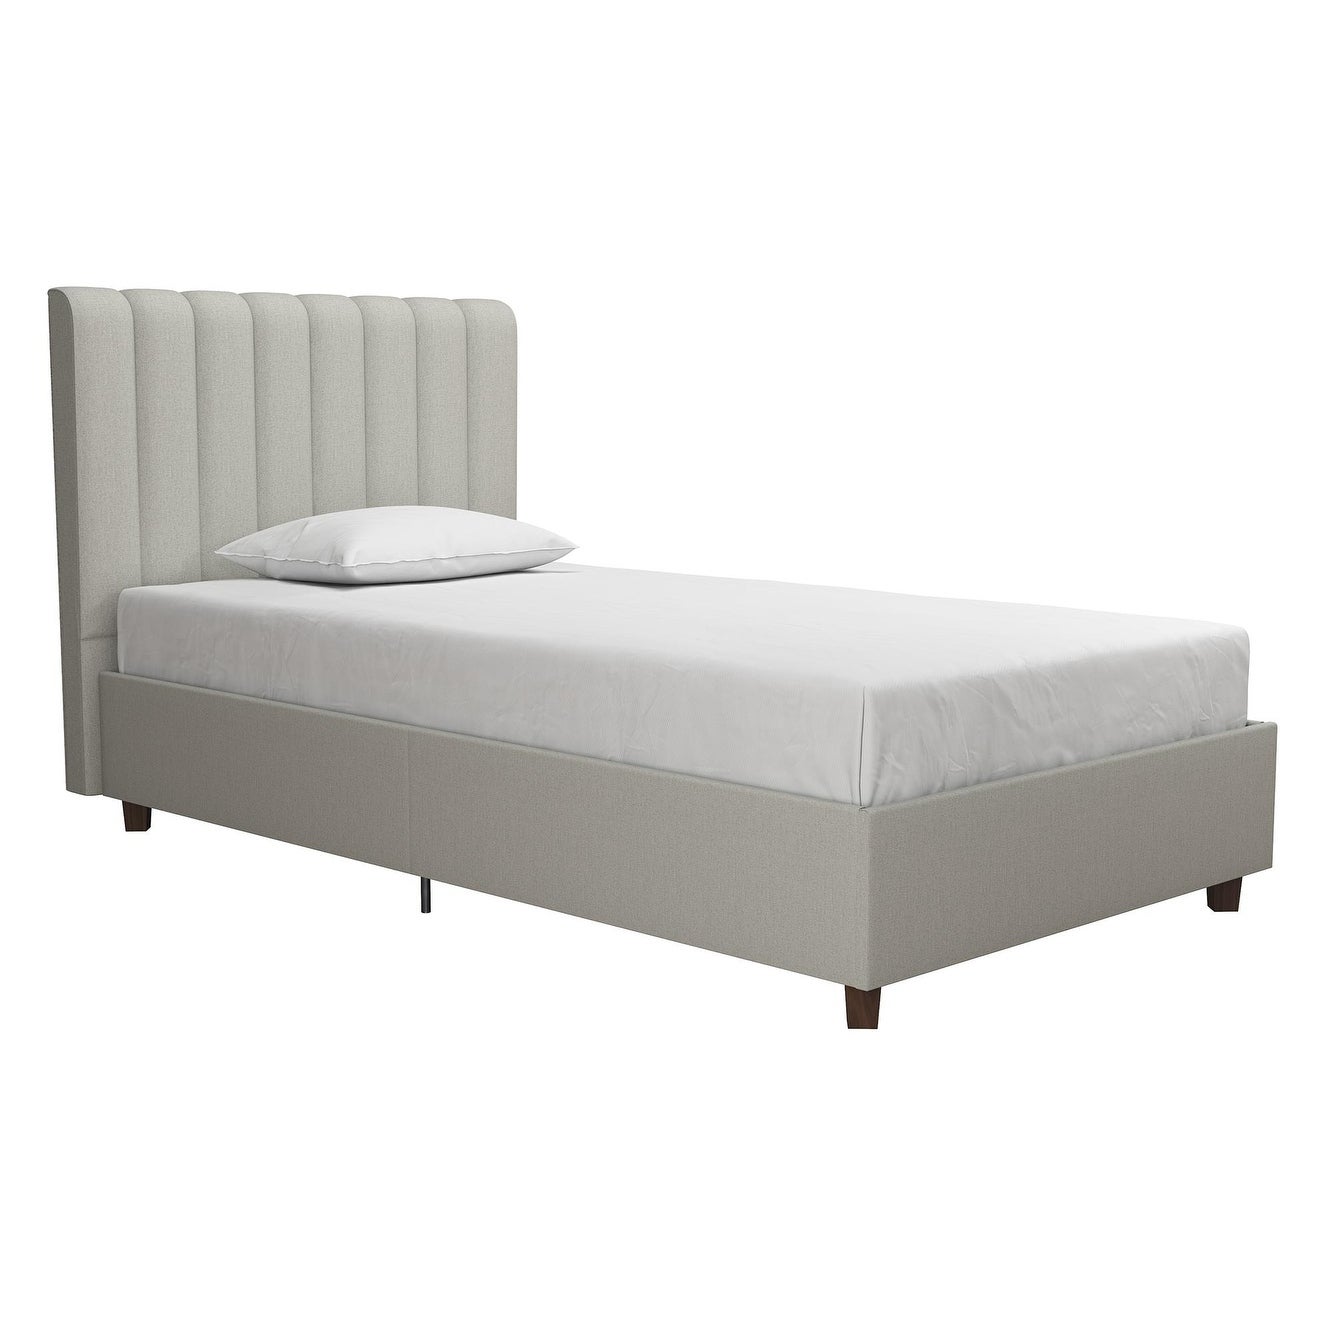 Kingbird Furniture Company Brand Bedroom Furniture Custom Microfiber Couch Ashley Furniture 11